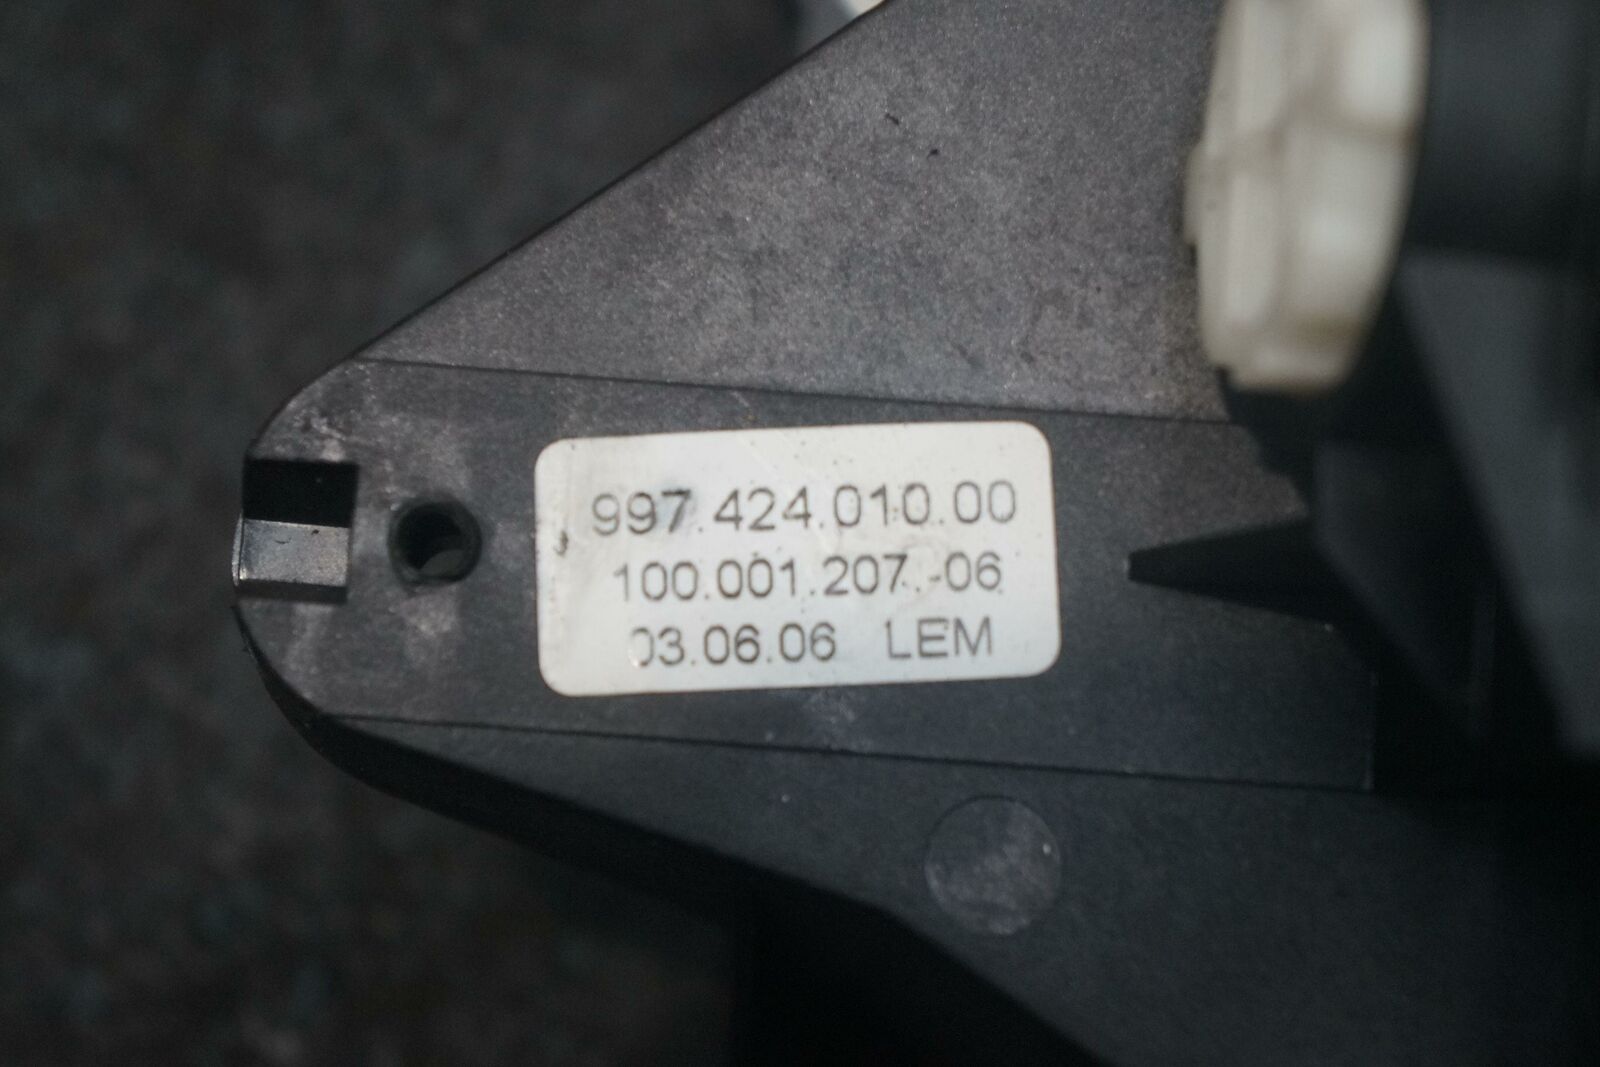 Manual Transmission Gear Shifter Shift Bracket 99742401000 OEM Porsche ...